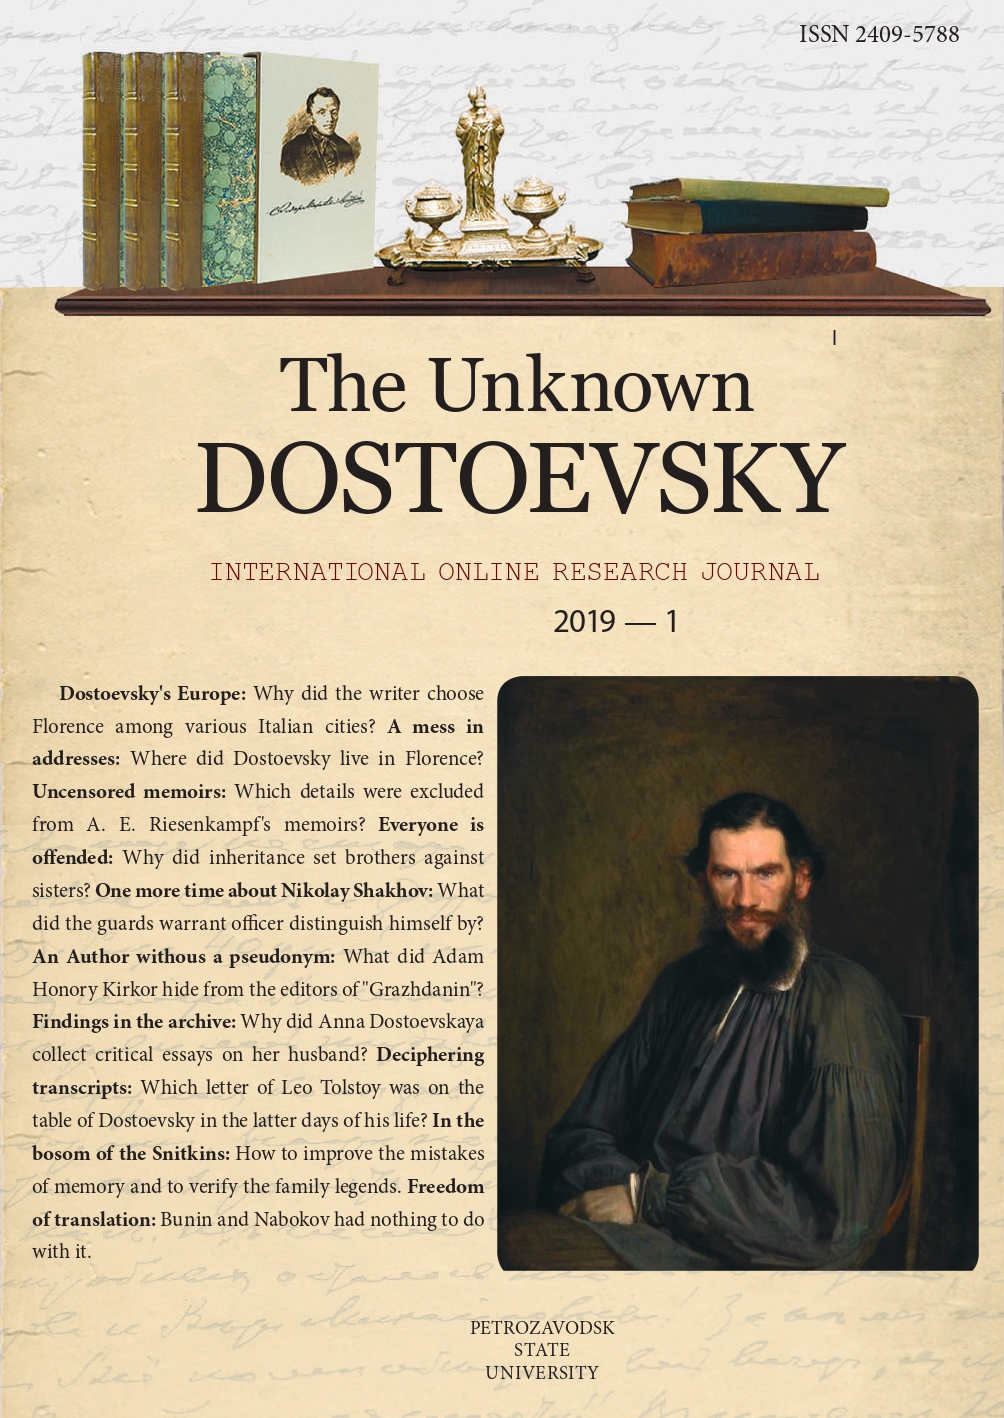 Florentine Addresses of Dostoevsky Cover Image